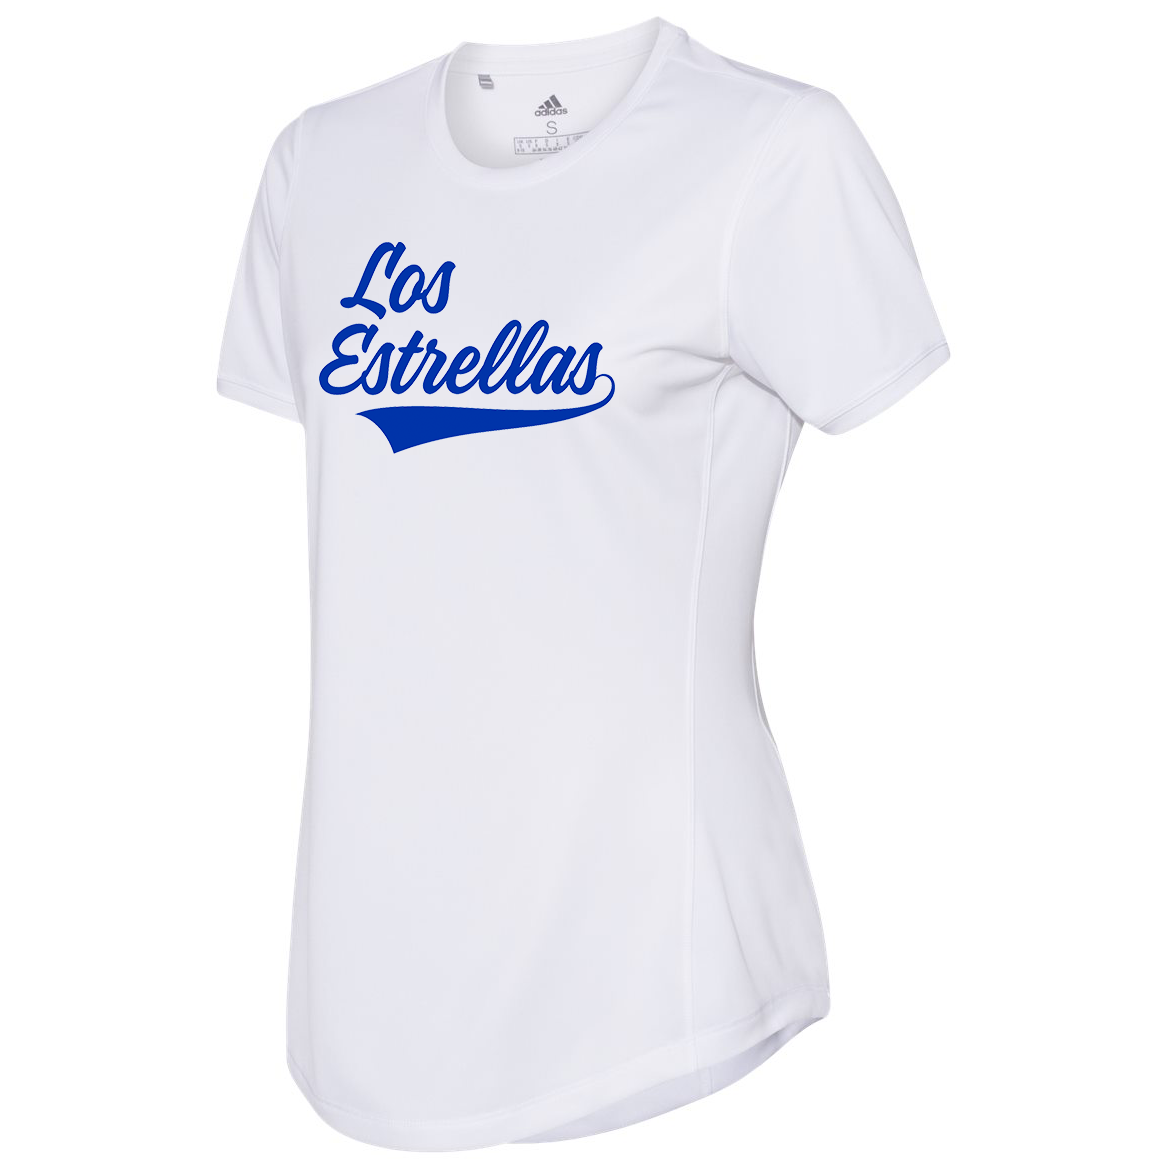 Los Estrellas Women's Adidas Sport T-Shirt